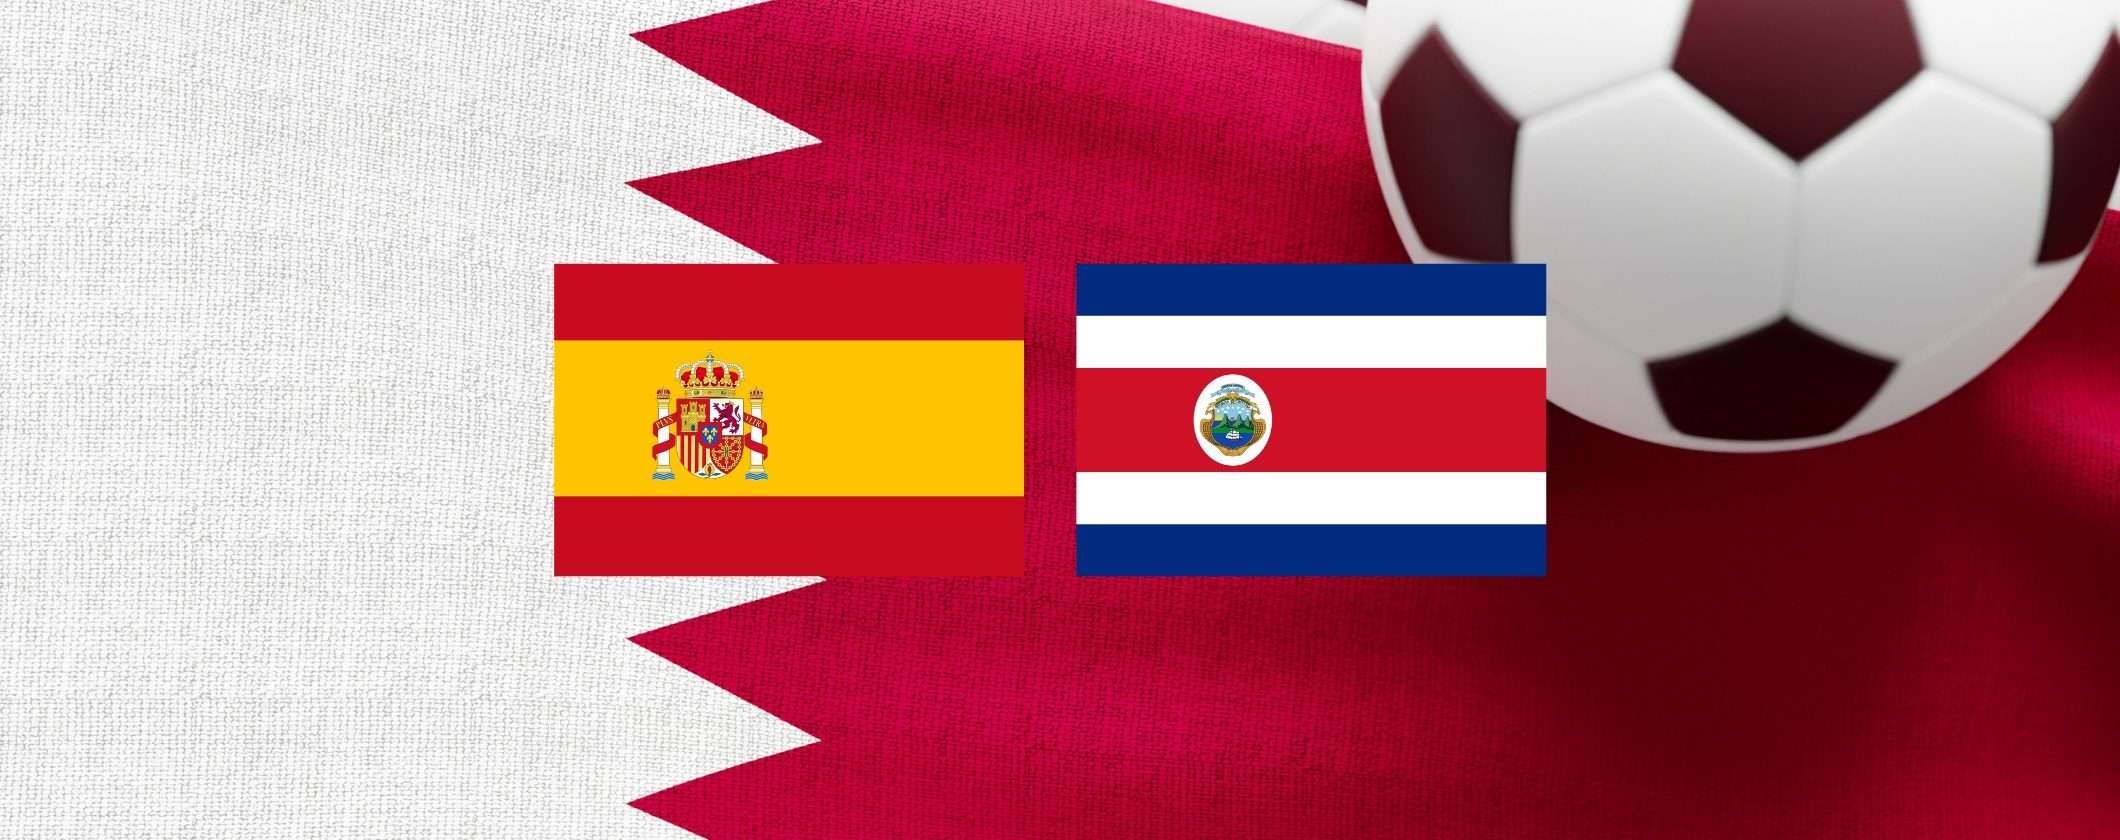 Vedi subito Spagna-Costa Rica in streaming senza buffering